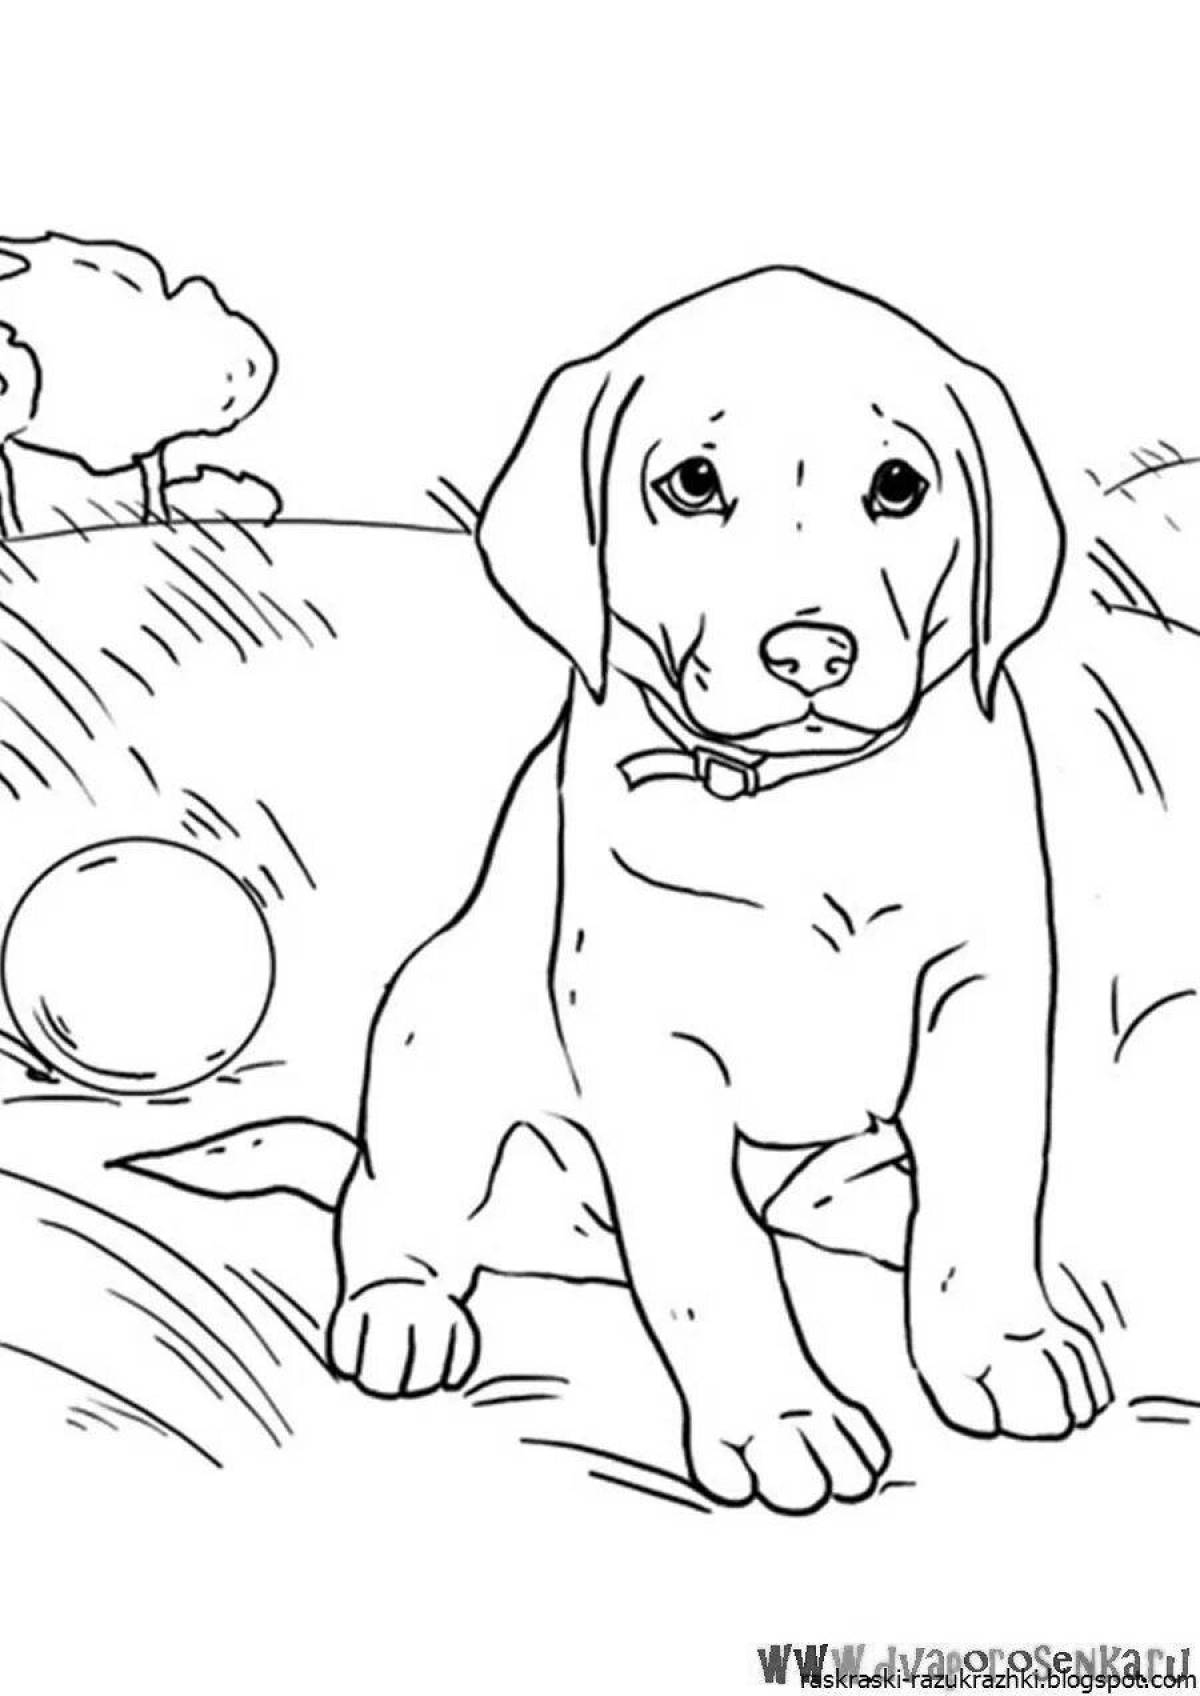 Adorable coloring book for dog boys